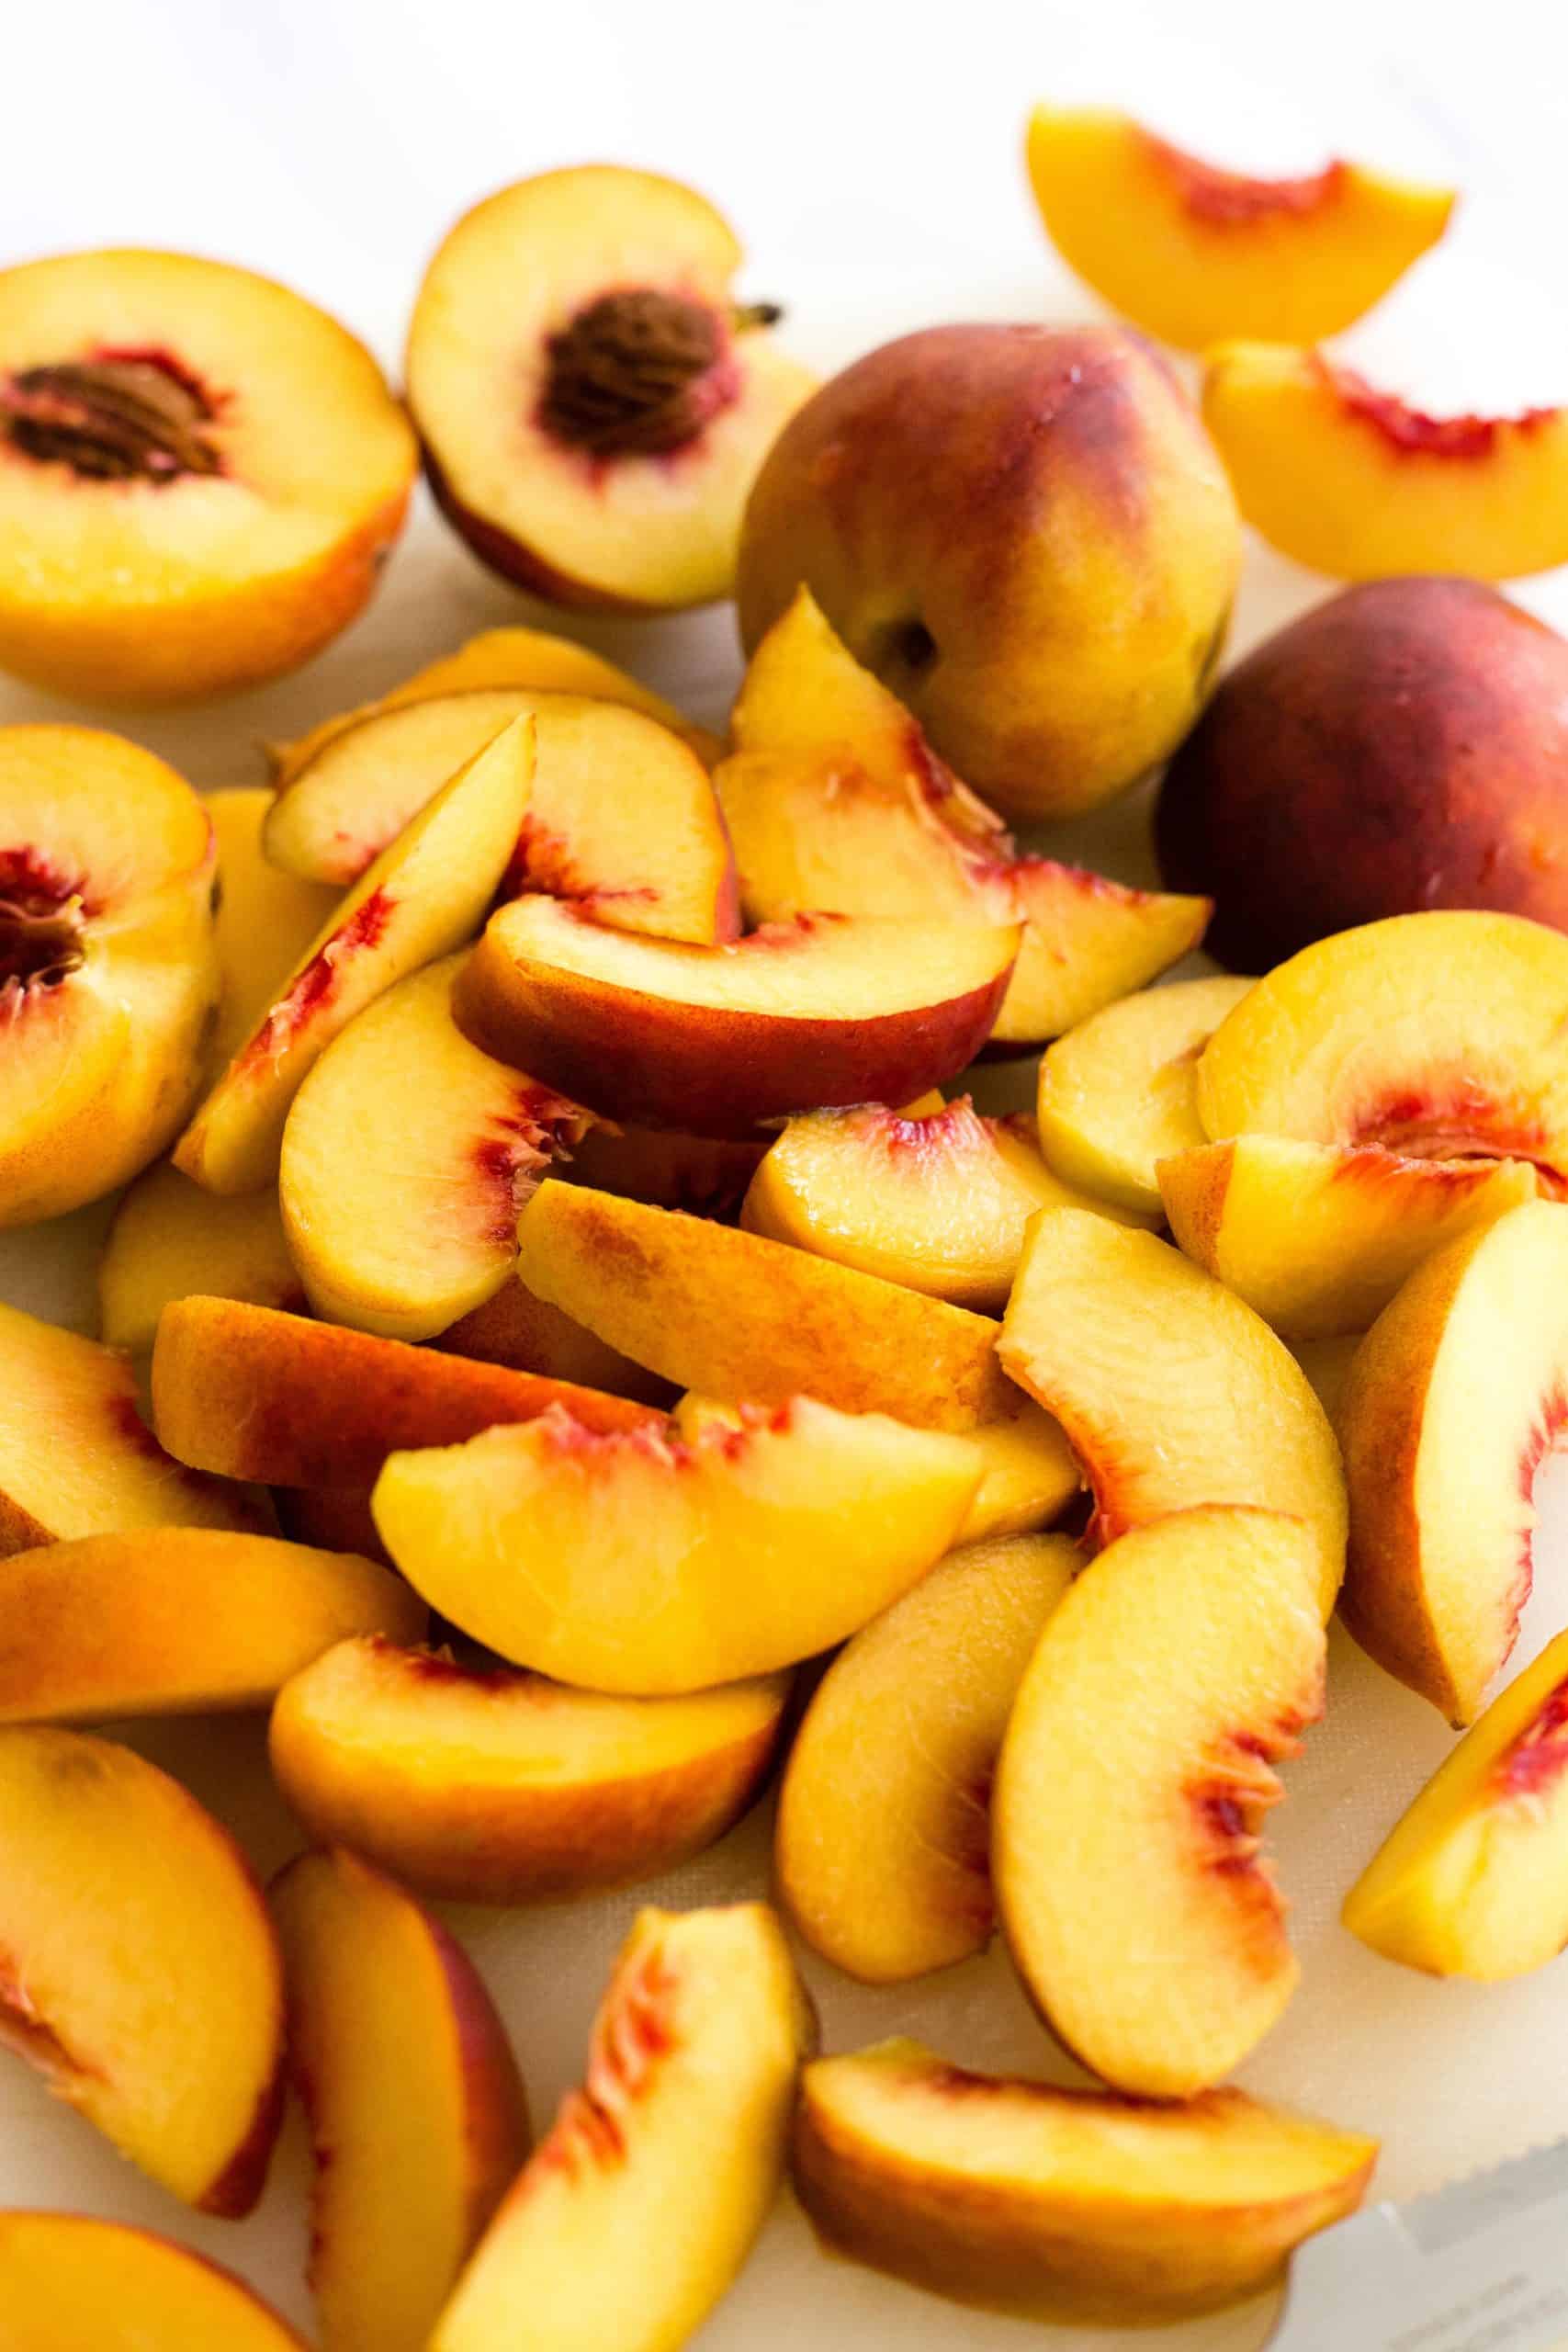 Sliced ripe peaches on a cutting board.